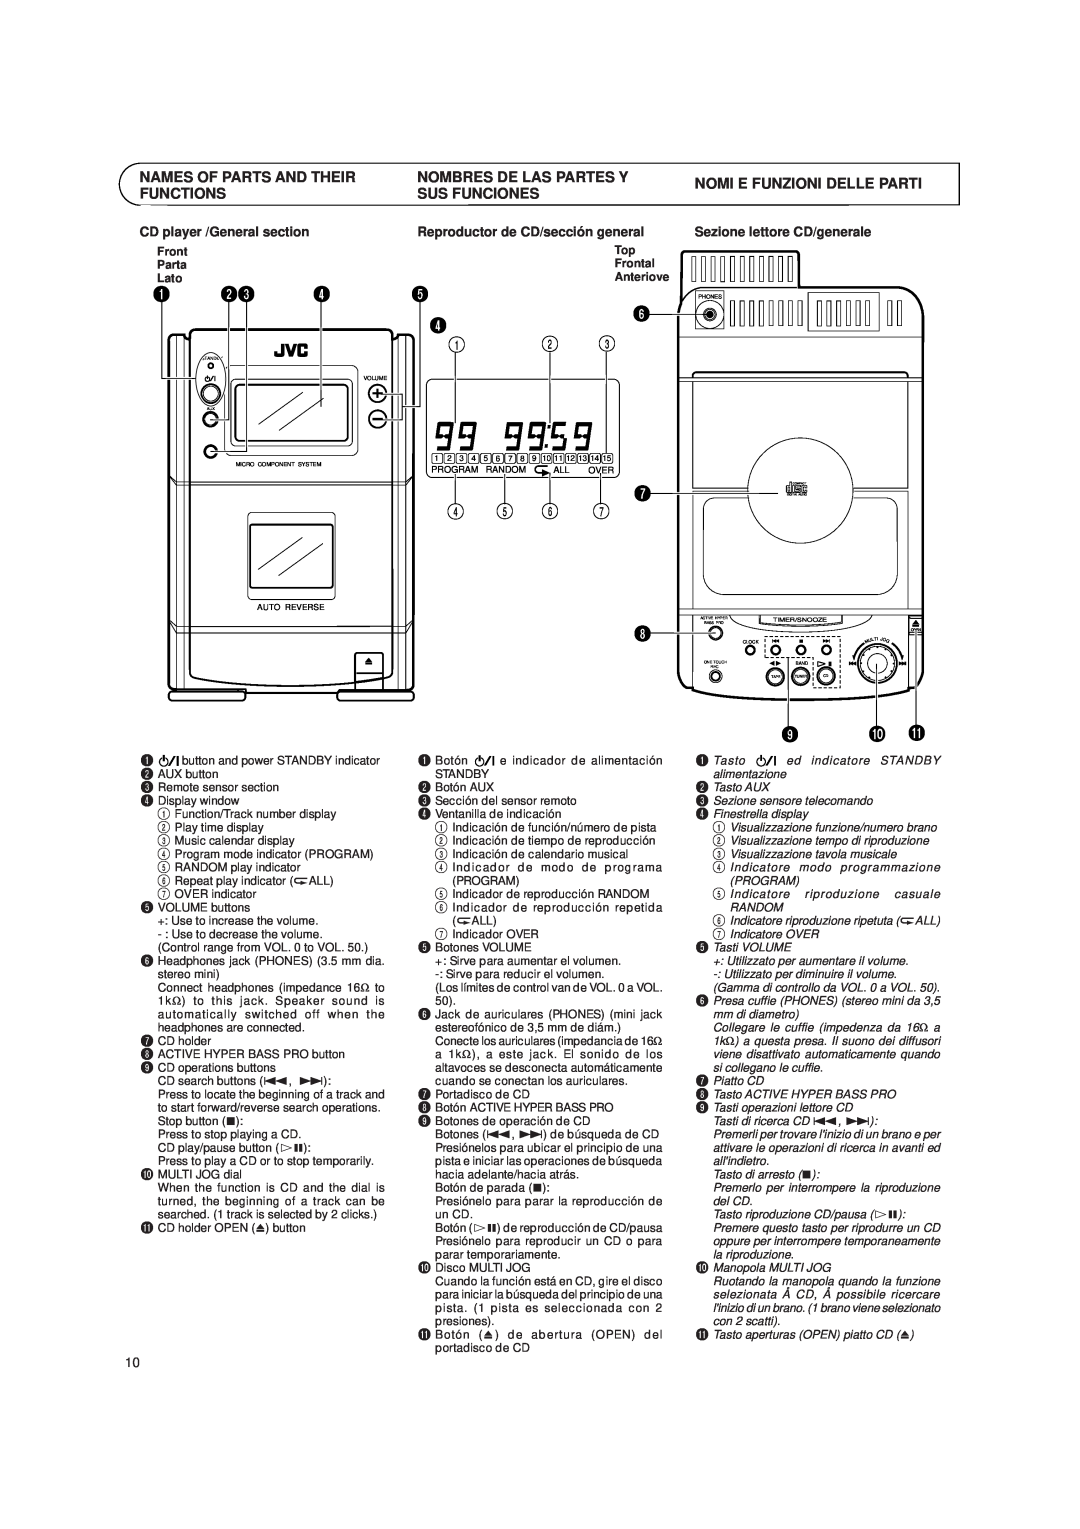 JVC UX-T151, UX-T150 manual CD player /General section, Reproductor de CD/sección general, Sezione lettore CD/generale 